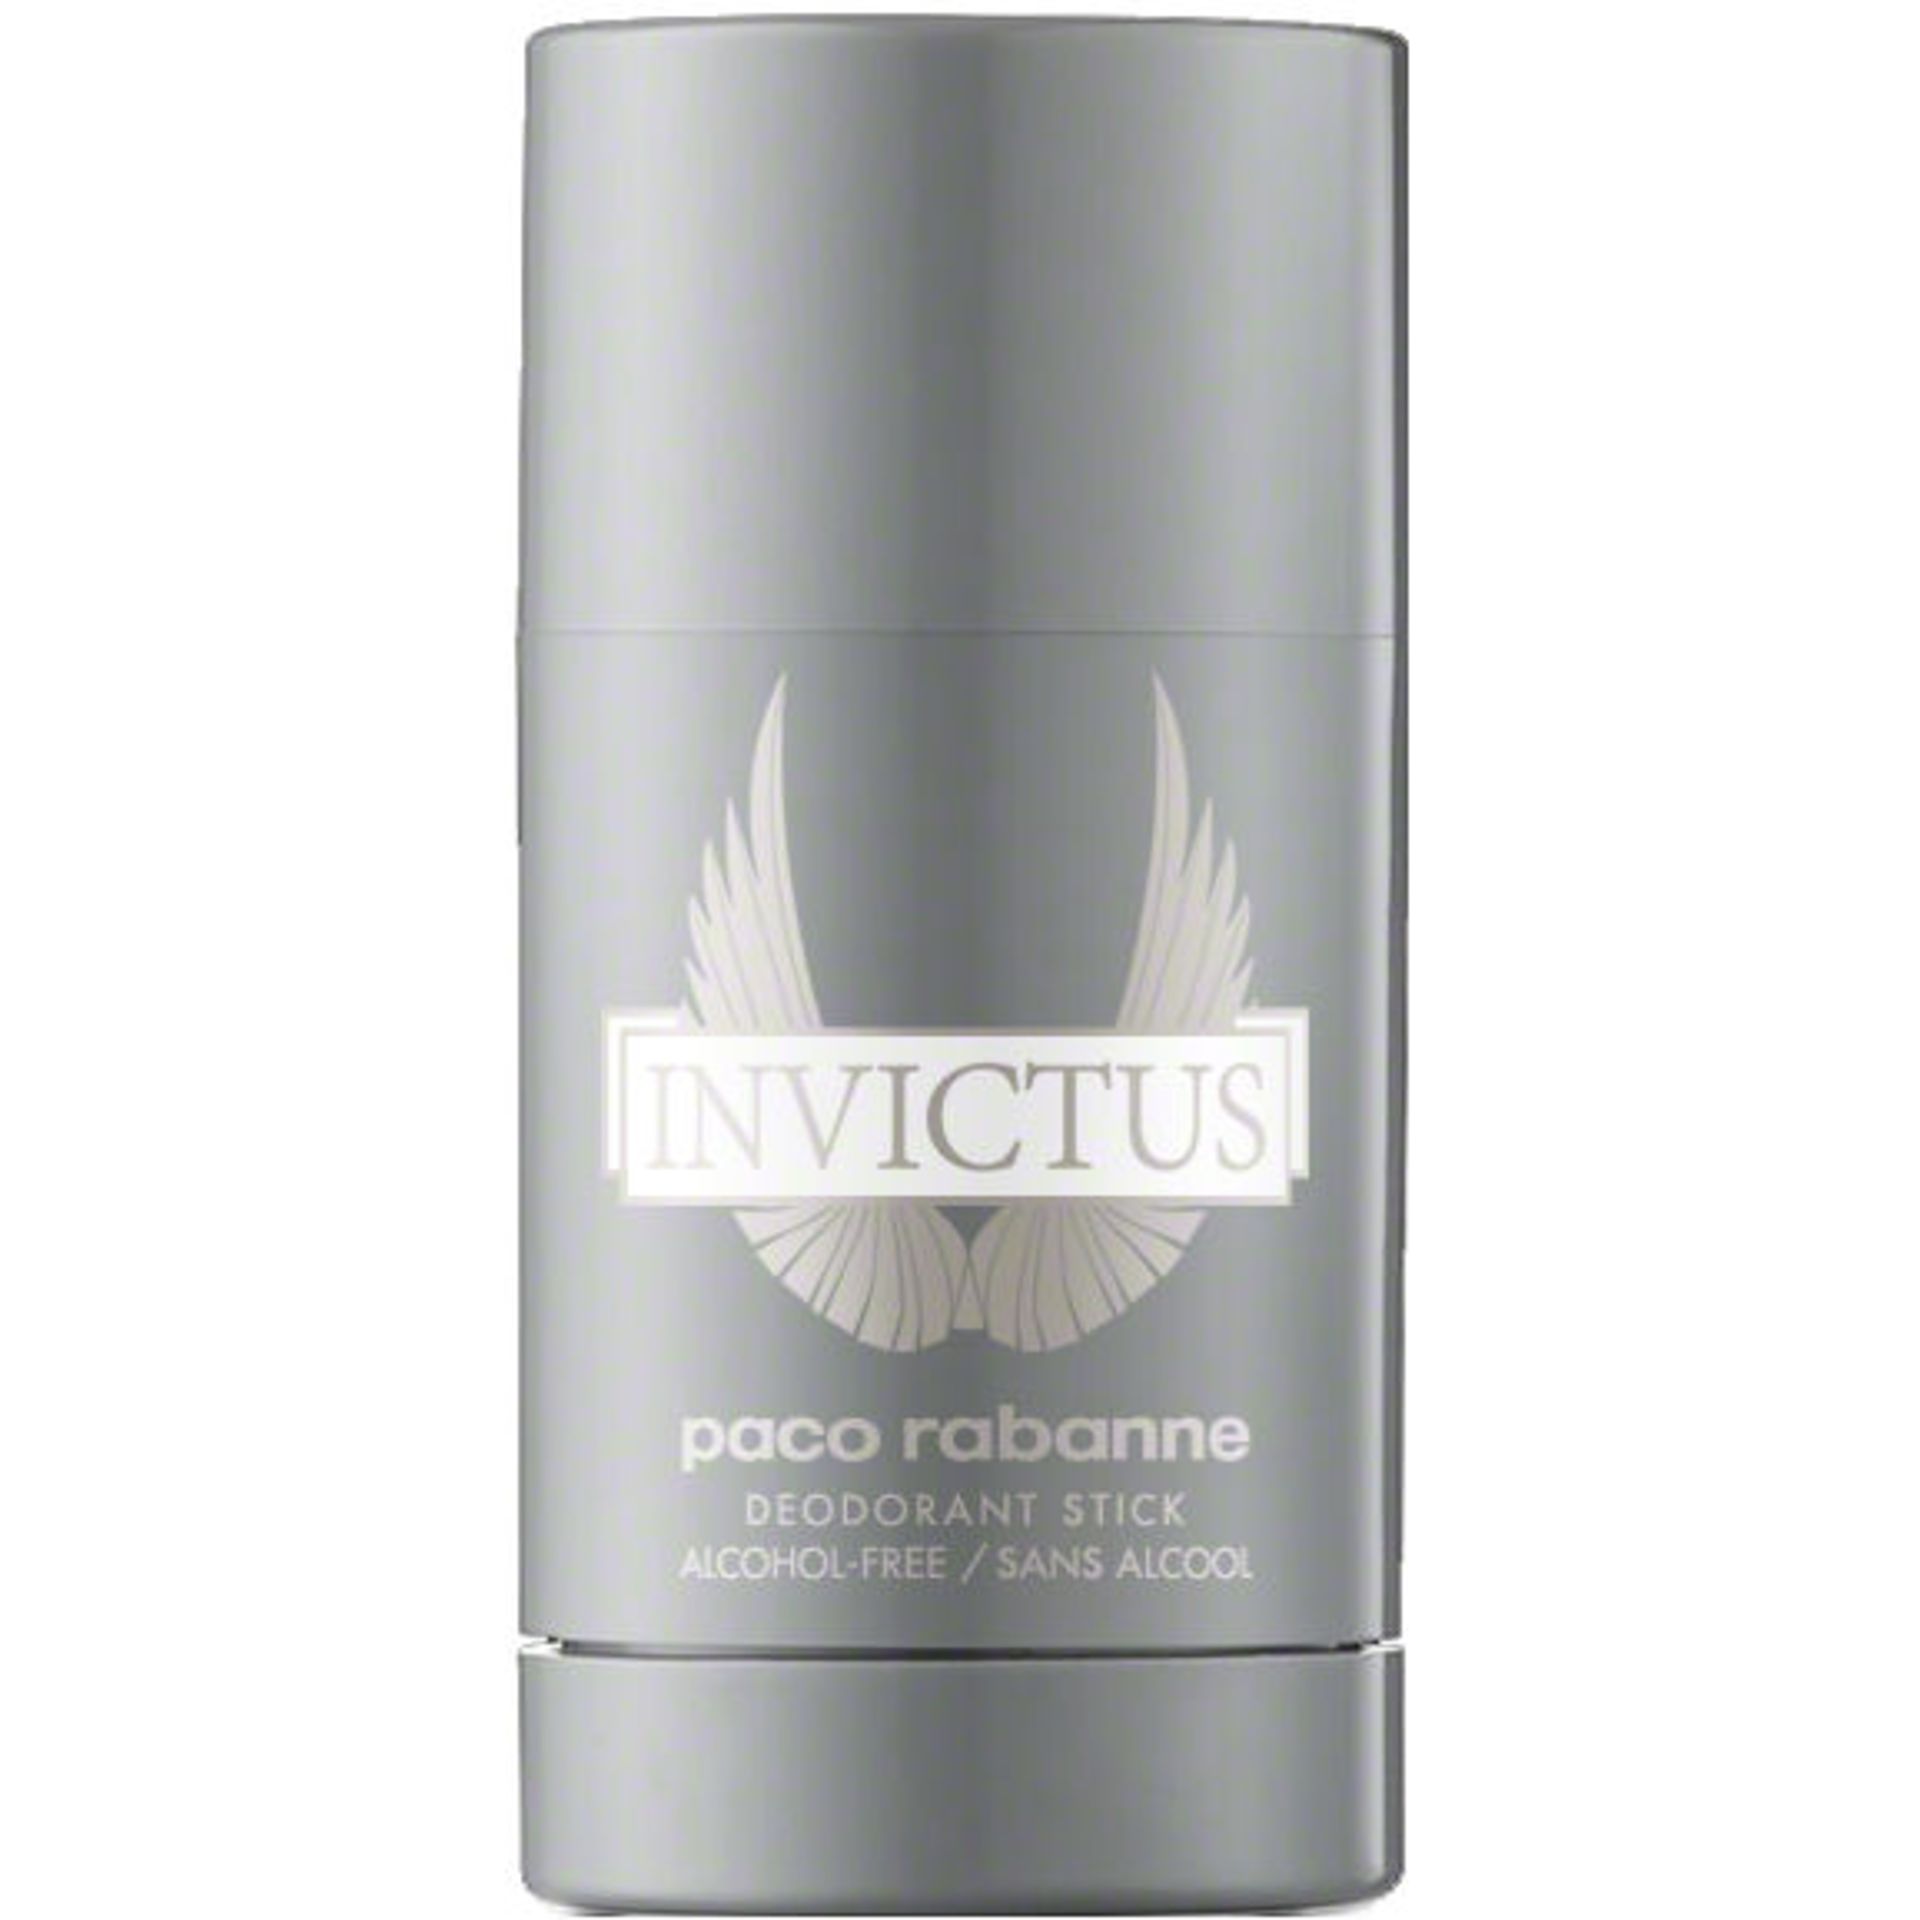 + VAT Brand New Paco Rabanne Invictus 75g Deodorant Stick